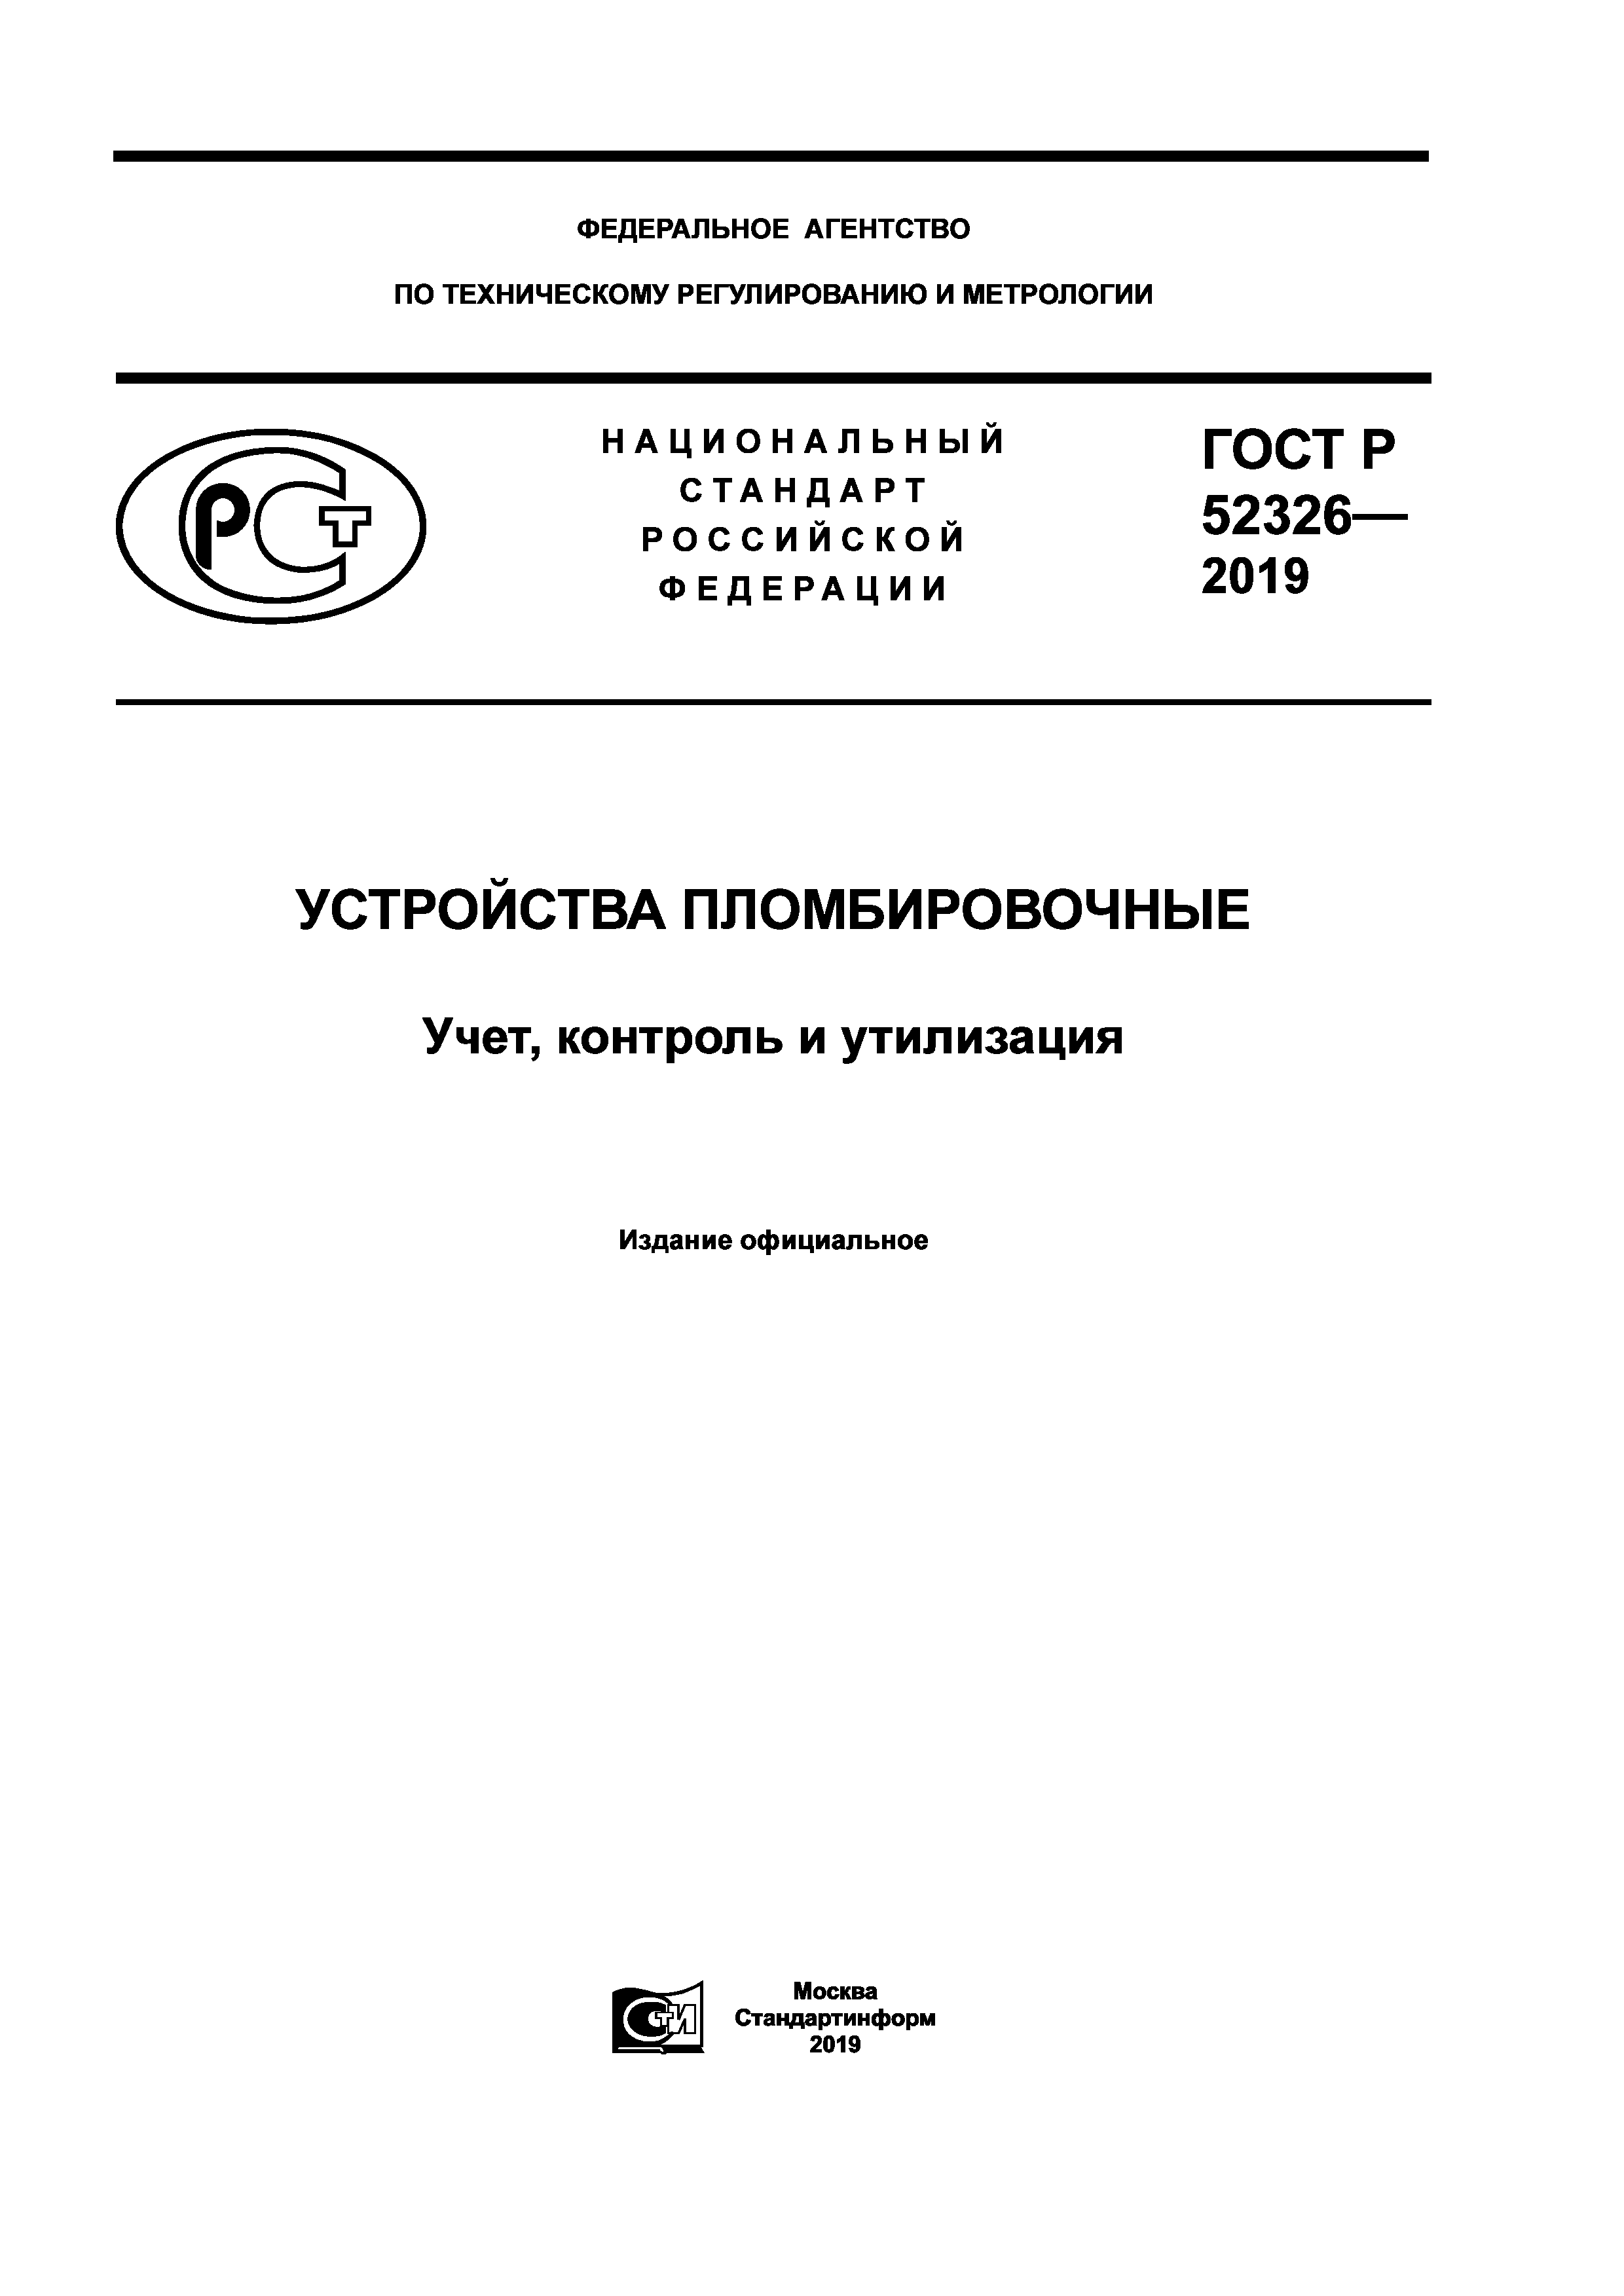 ГОСТ Р 52326-2019